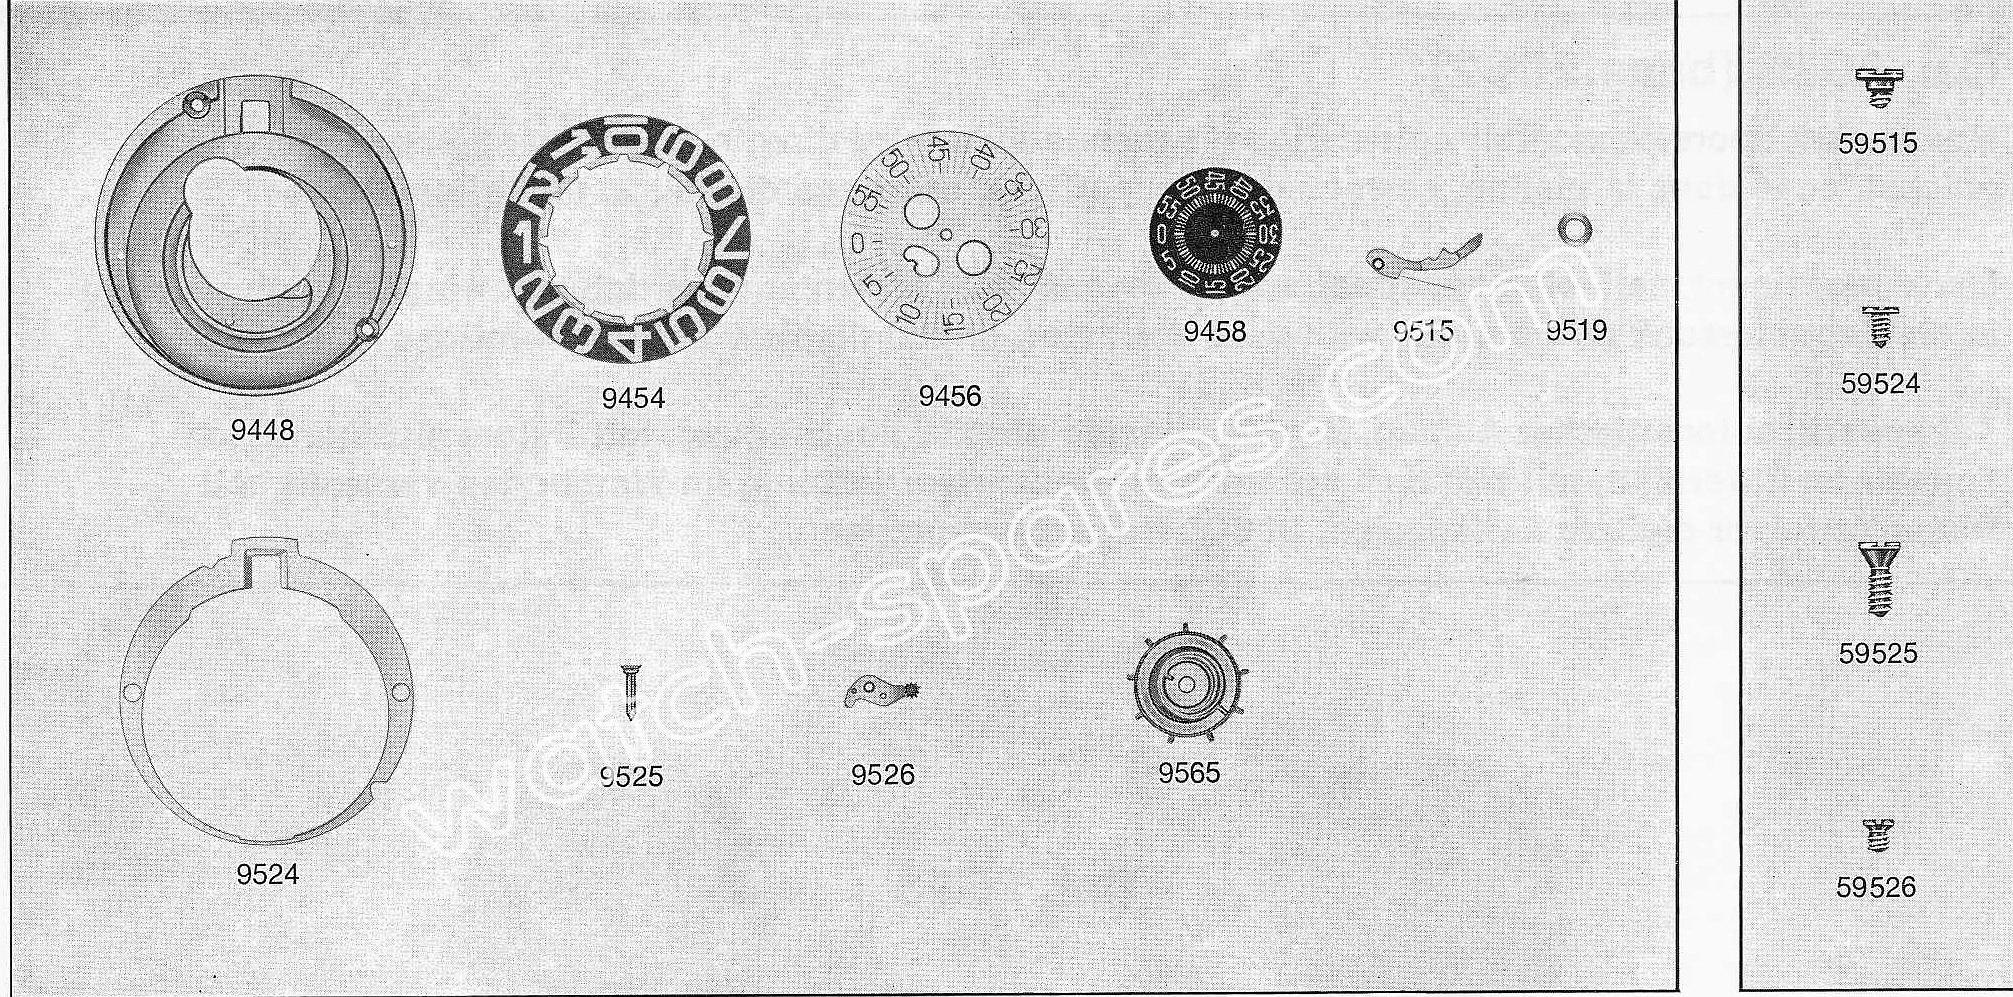 A Schild AS 2073 watch date parts